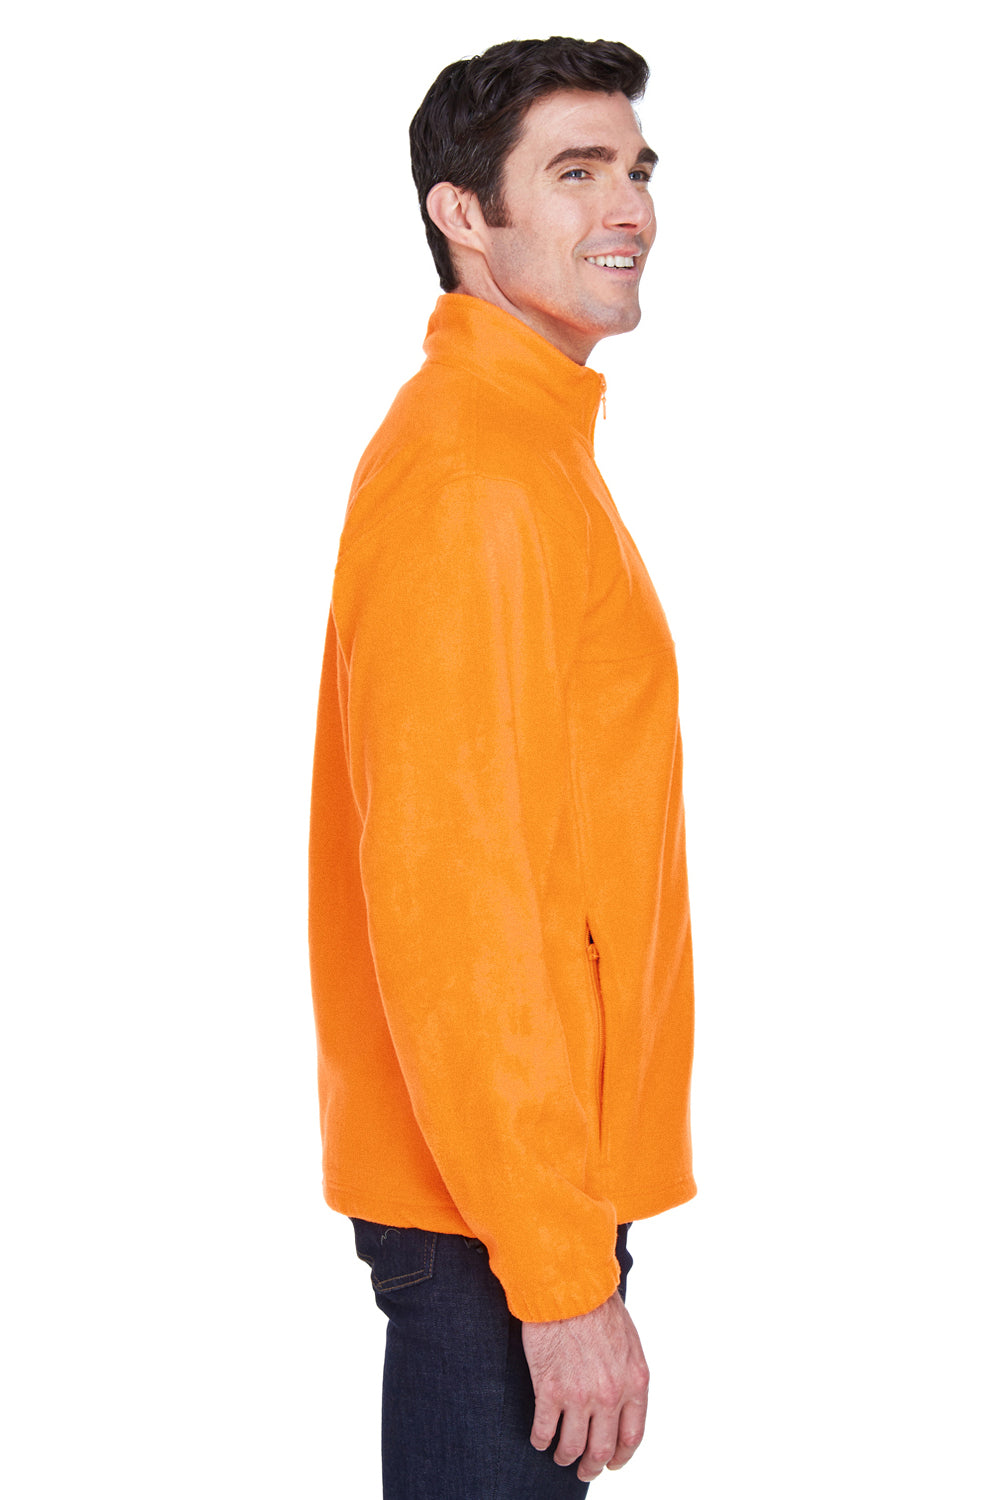 Harriton M990 Mens Full Zip Fleece Jacket Safety Orange Side